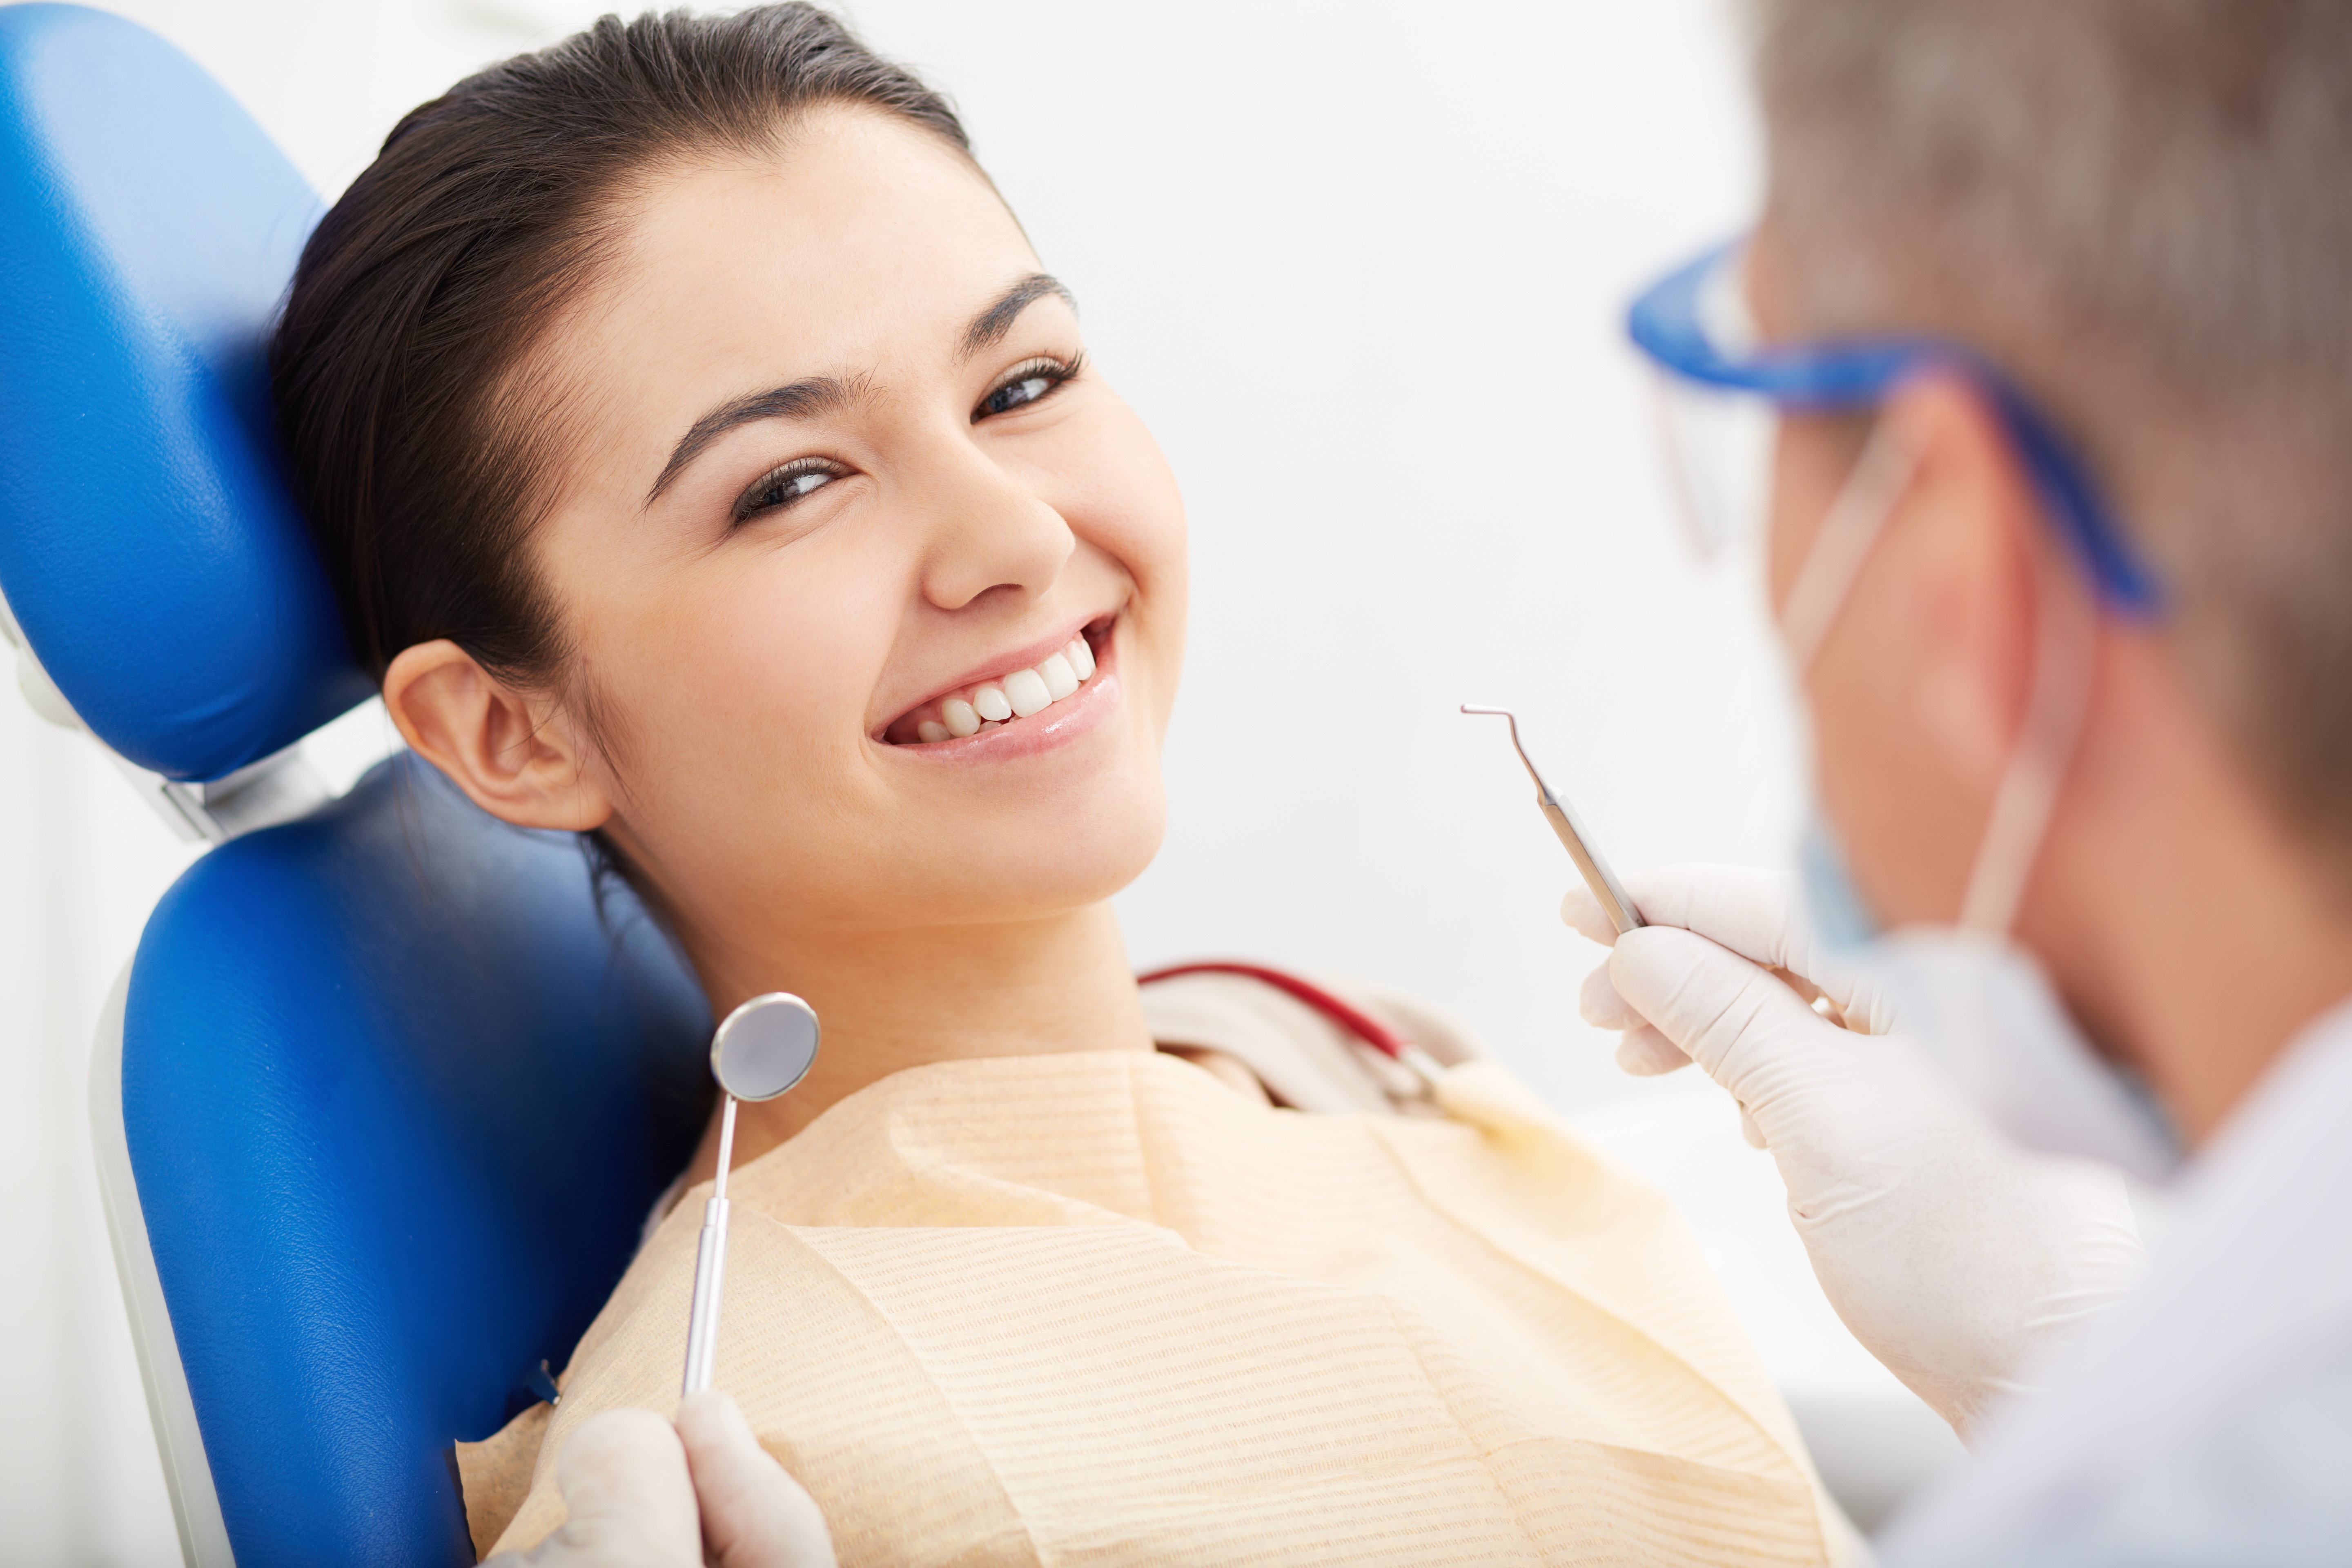 Dentistas en Hortaleza, dentistas en Canillas, implantes dentales en hortaleza(canillas).